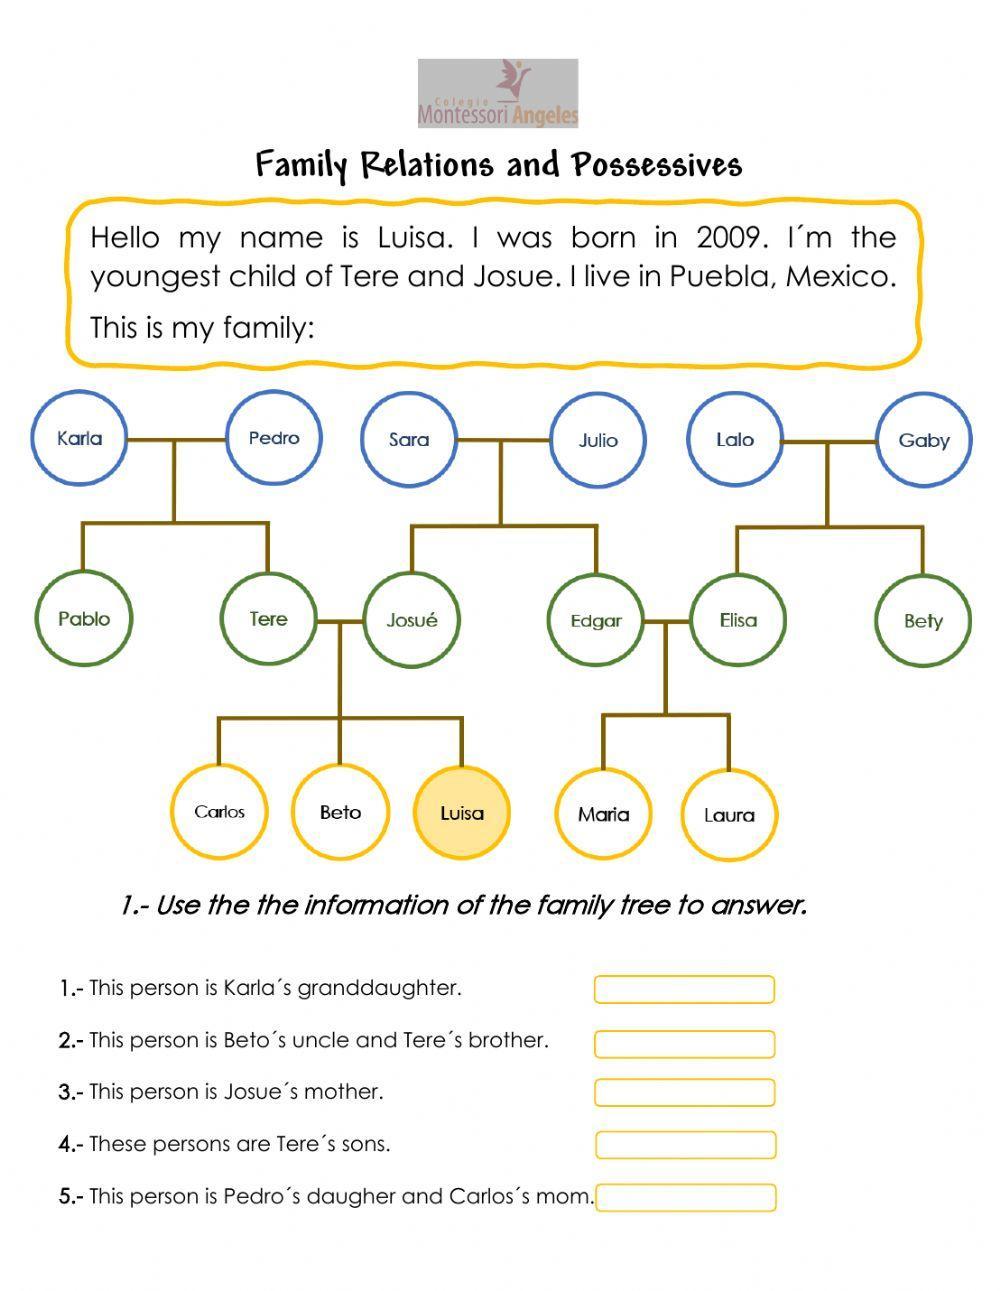 Family relations and possessives